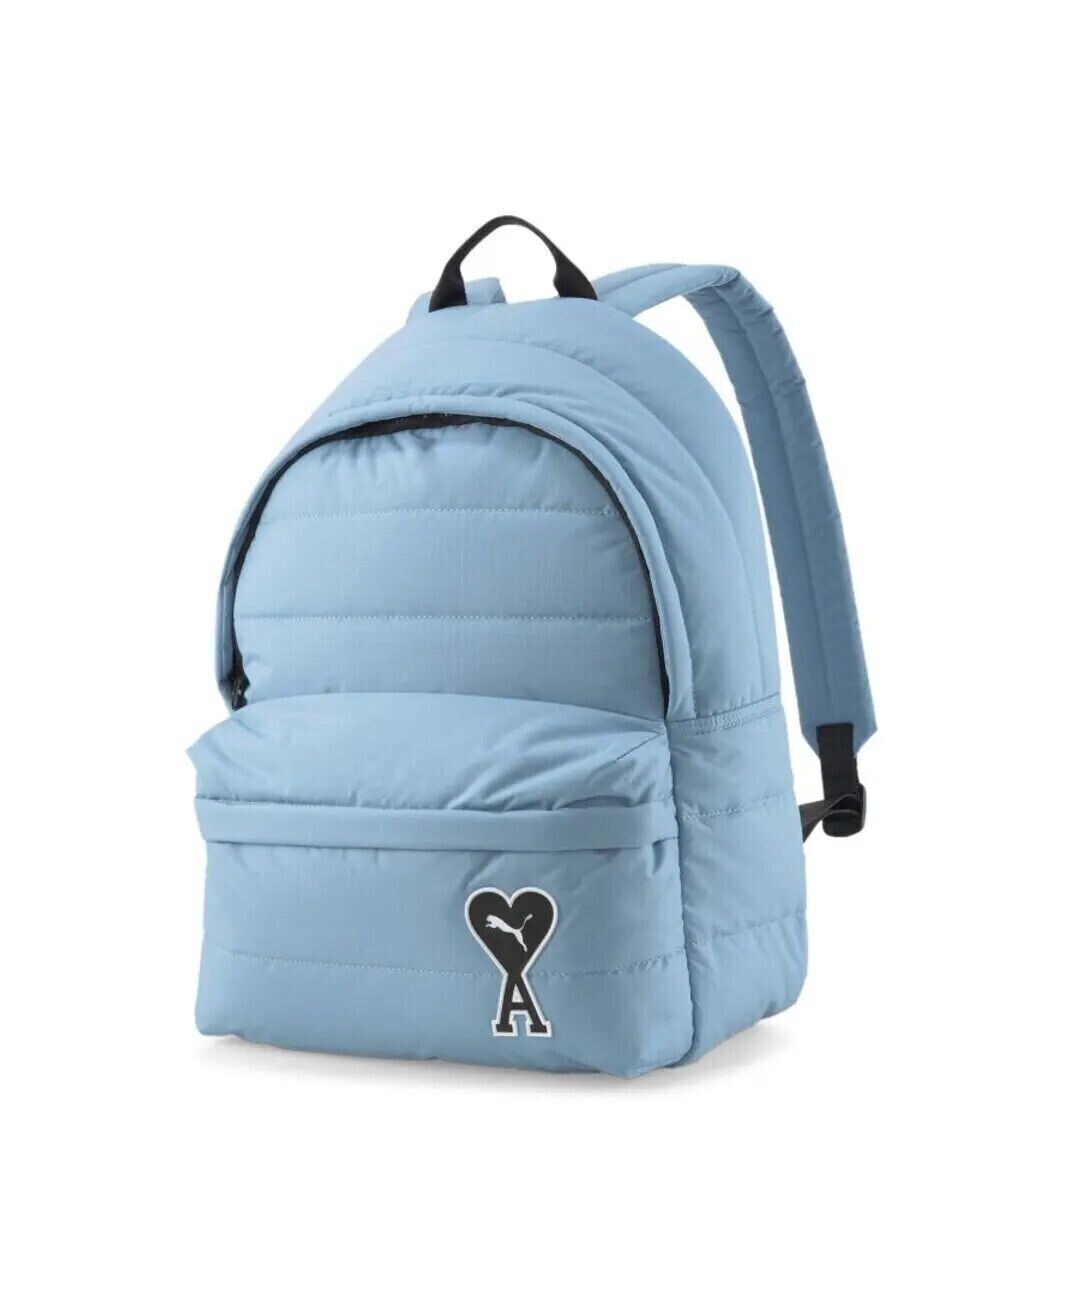 Puma x AMI Alexandre Mattiuss Unisex Blue Backpack Rucksack RRP£139